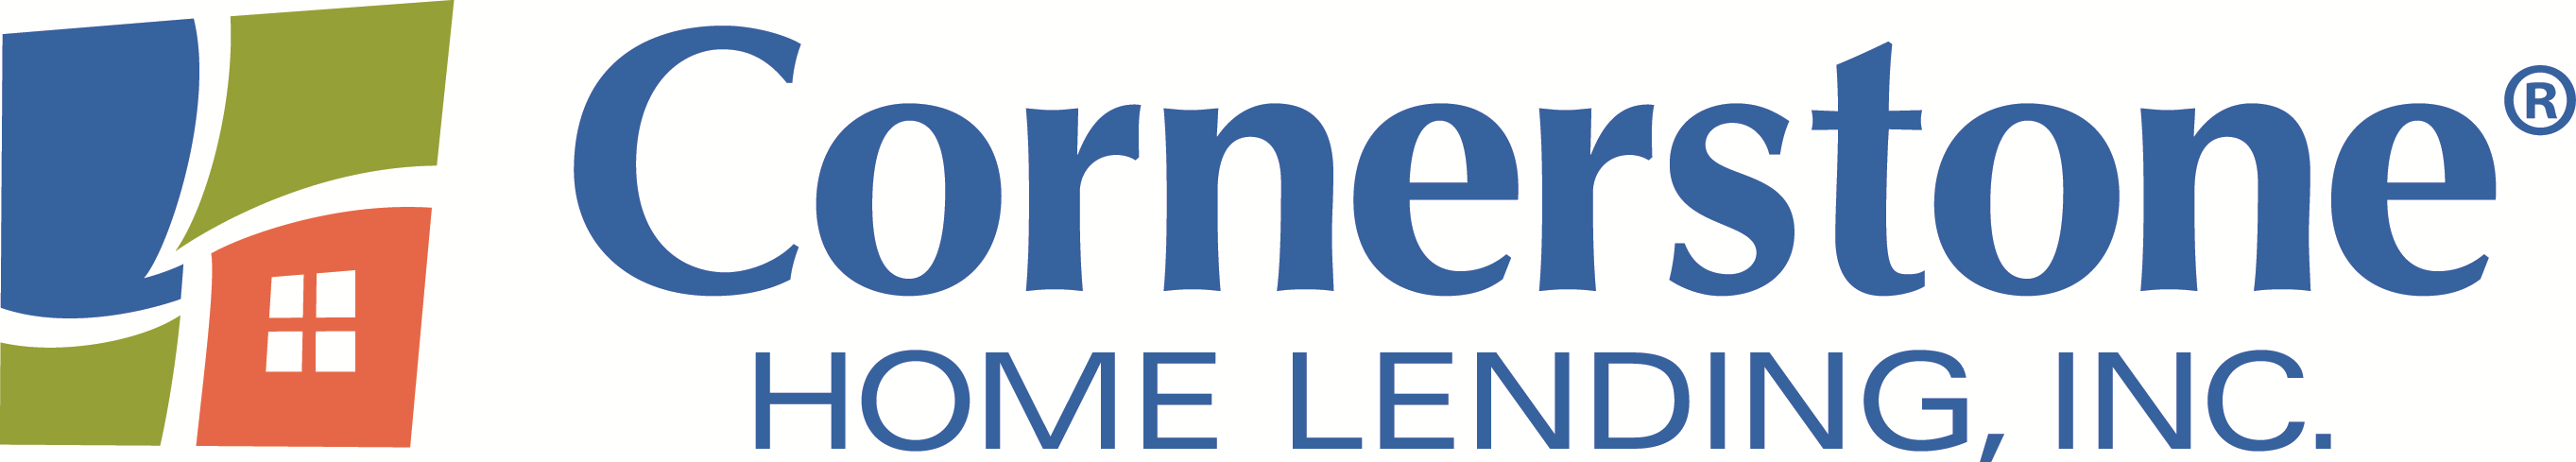 Cornerstone Home Lending, Inc logo